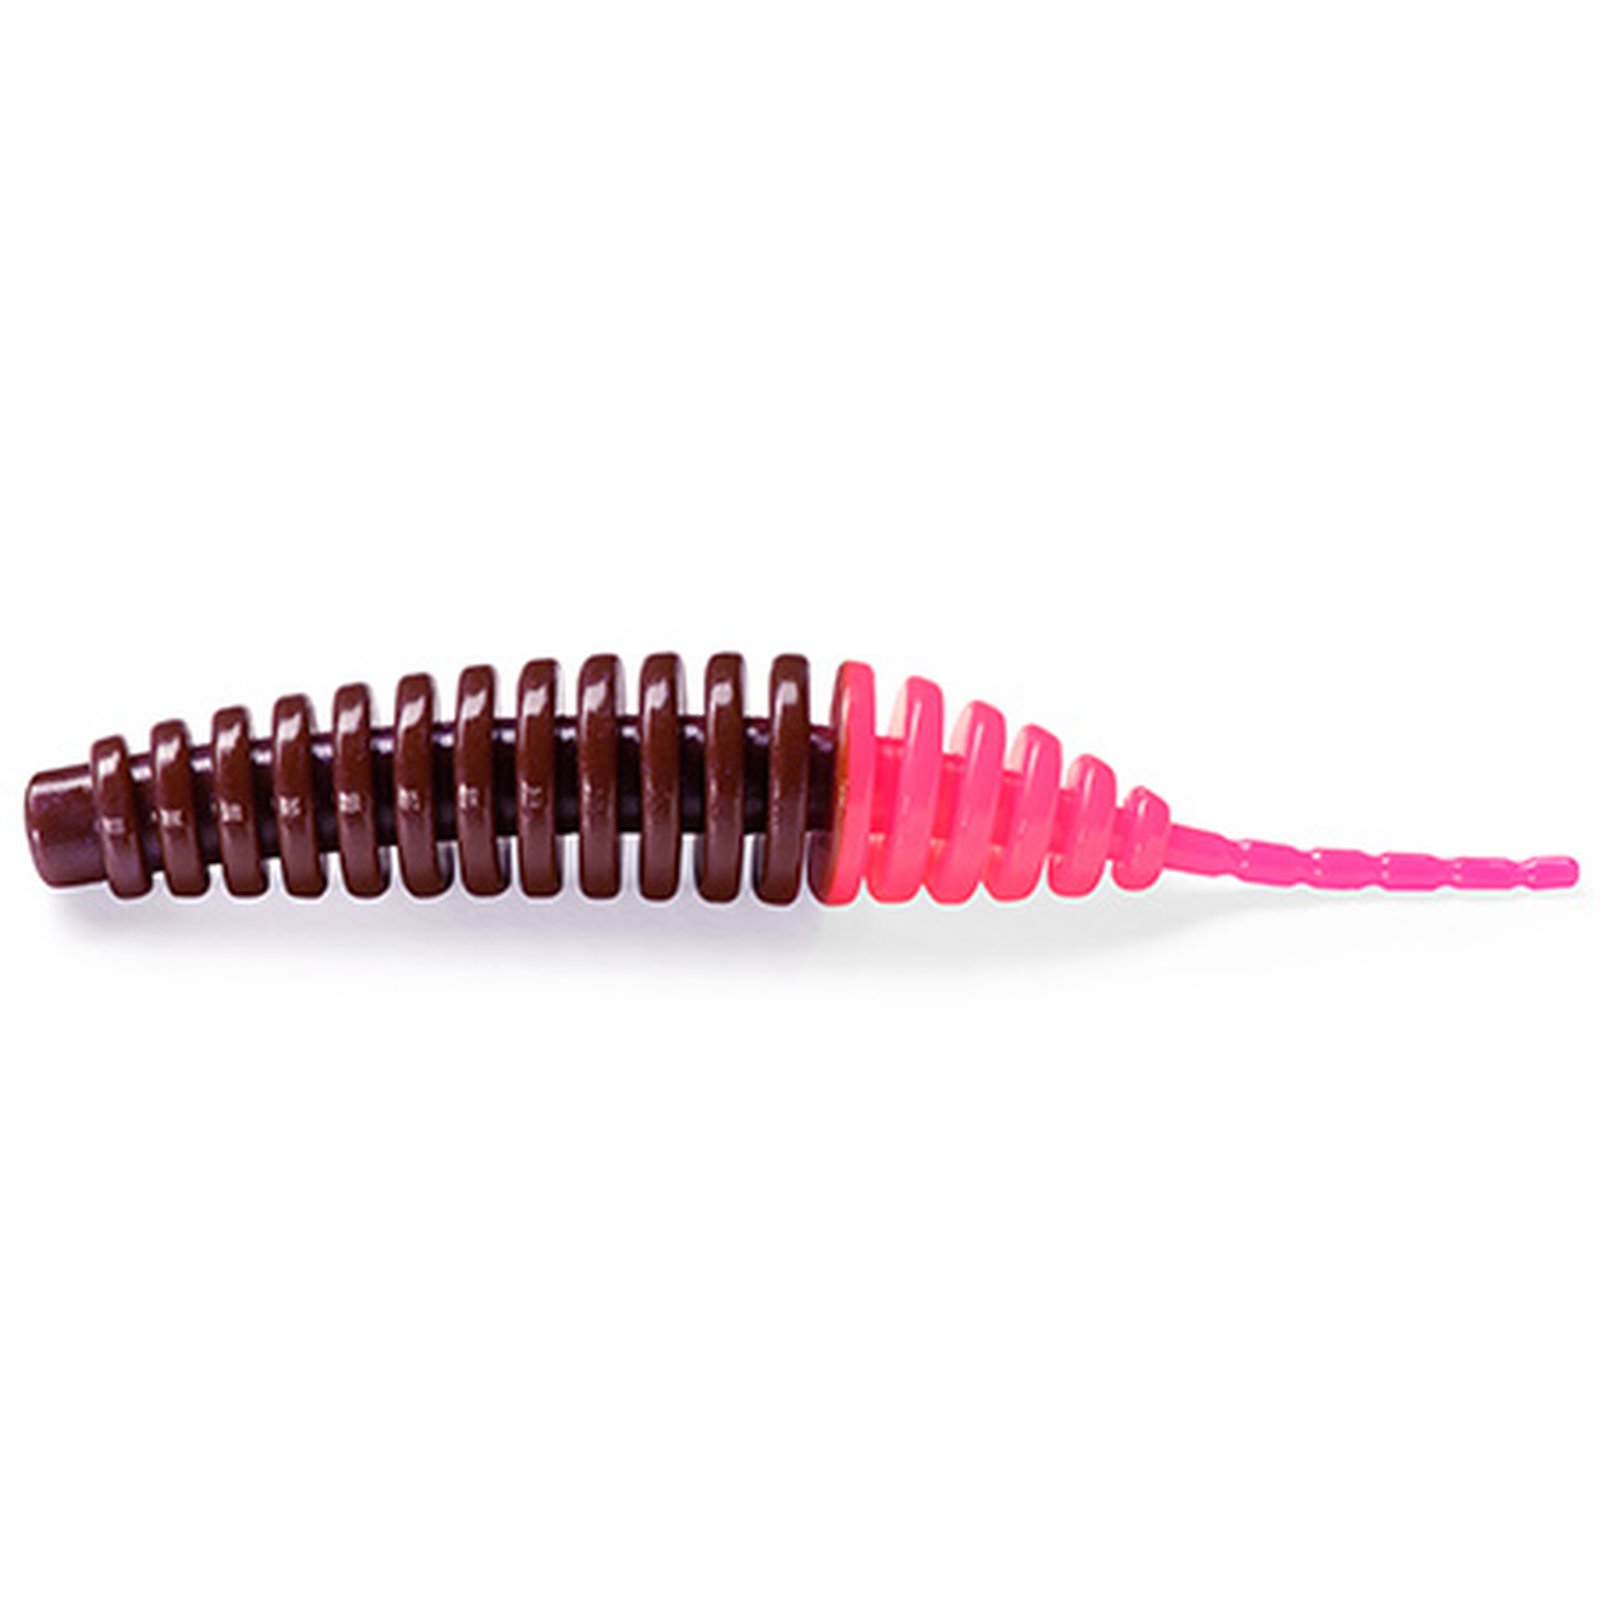 FishUp Tanta 2.5 (8pcs.), #139 - Earthworm/Hot Pink Knoblauch